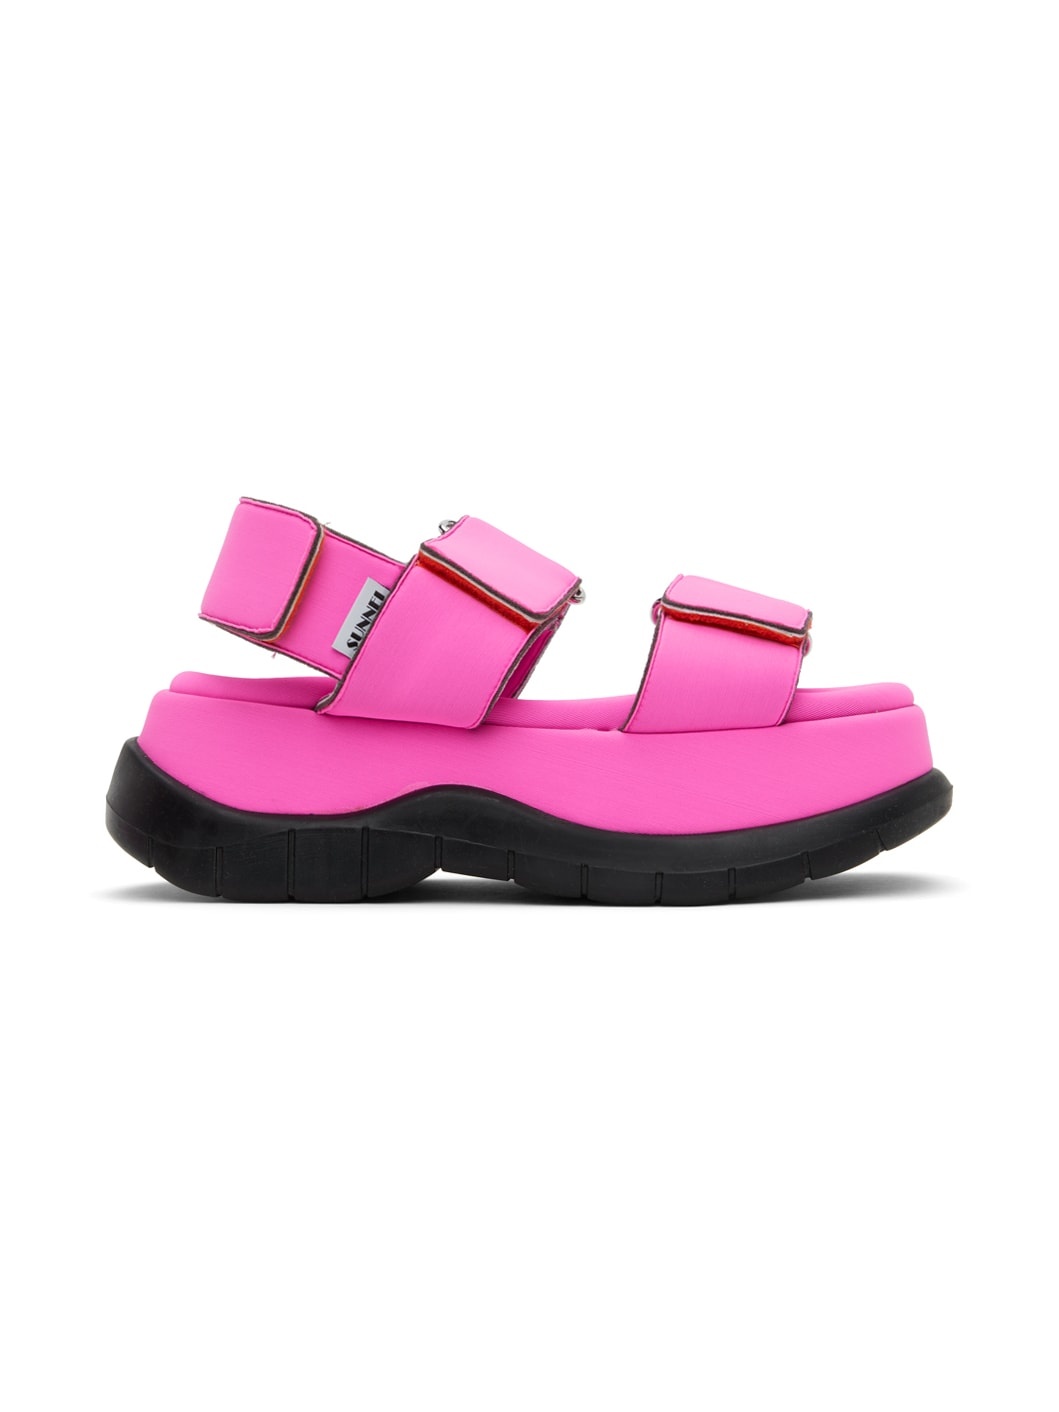 SSENSE Exclusive Pink Low Platform Sandals - 1